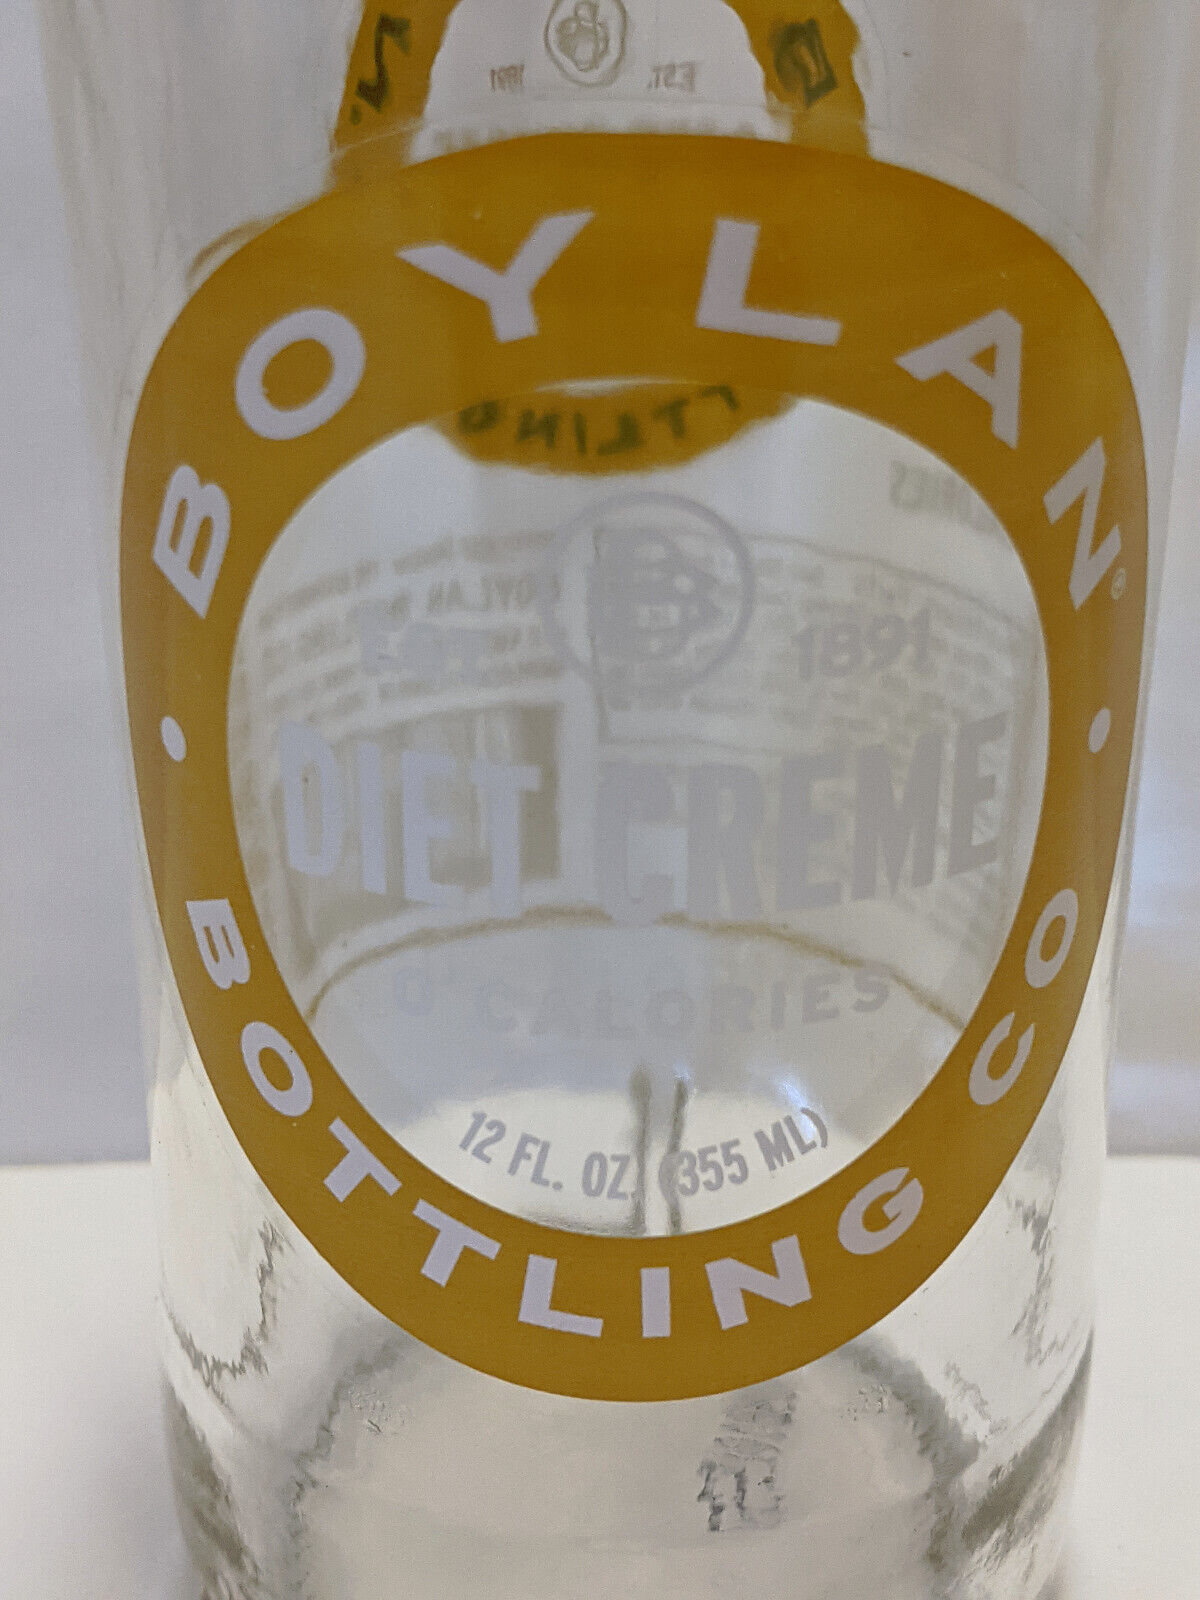 BOYLAN BOTTLING CO 12 oz Diet Creme Soda Glass Bottle with Lid  Empty